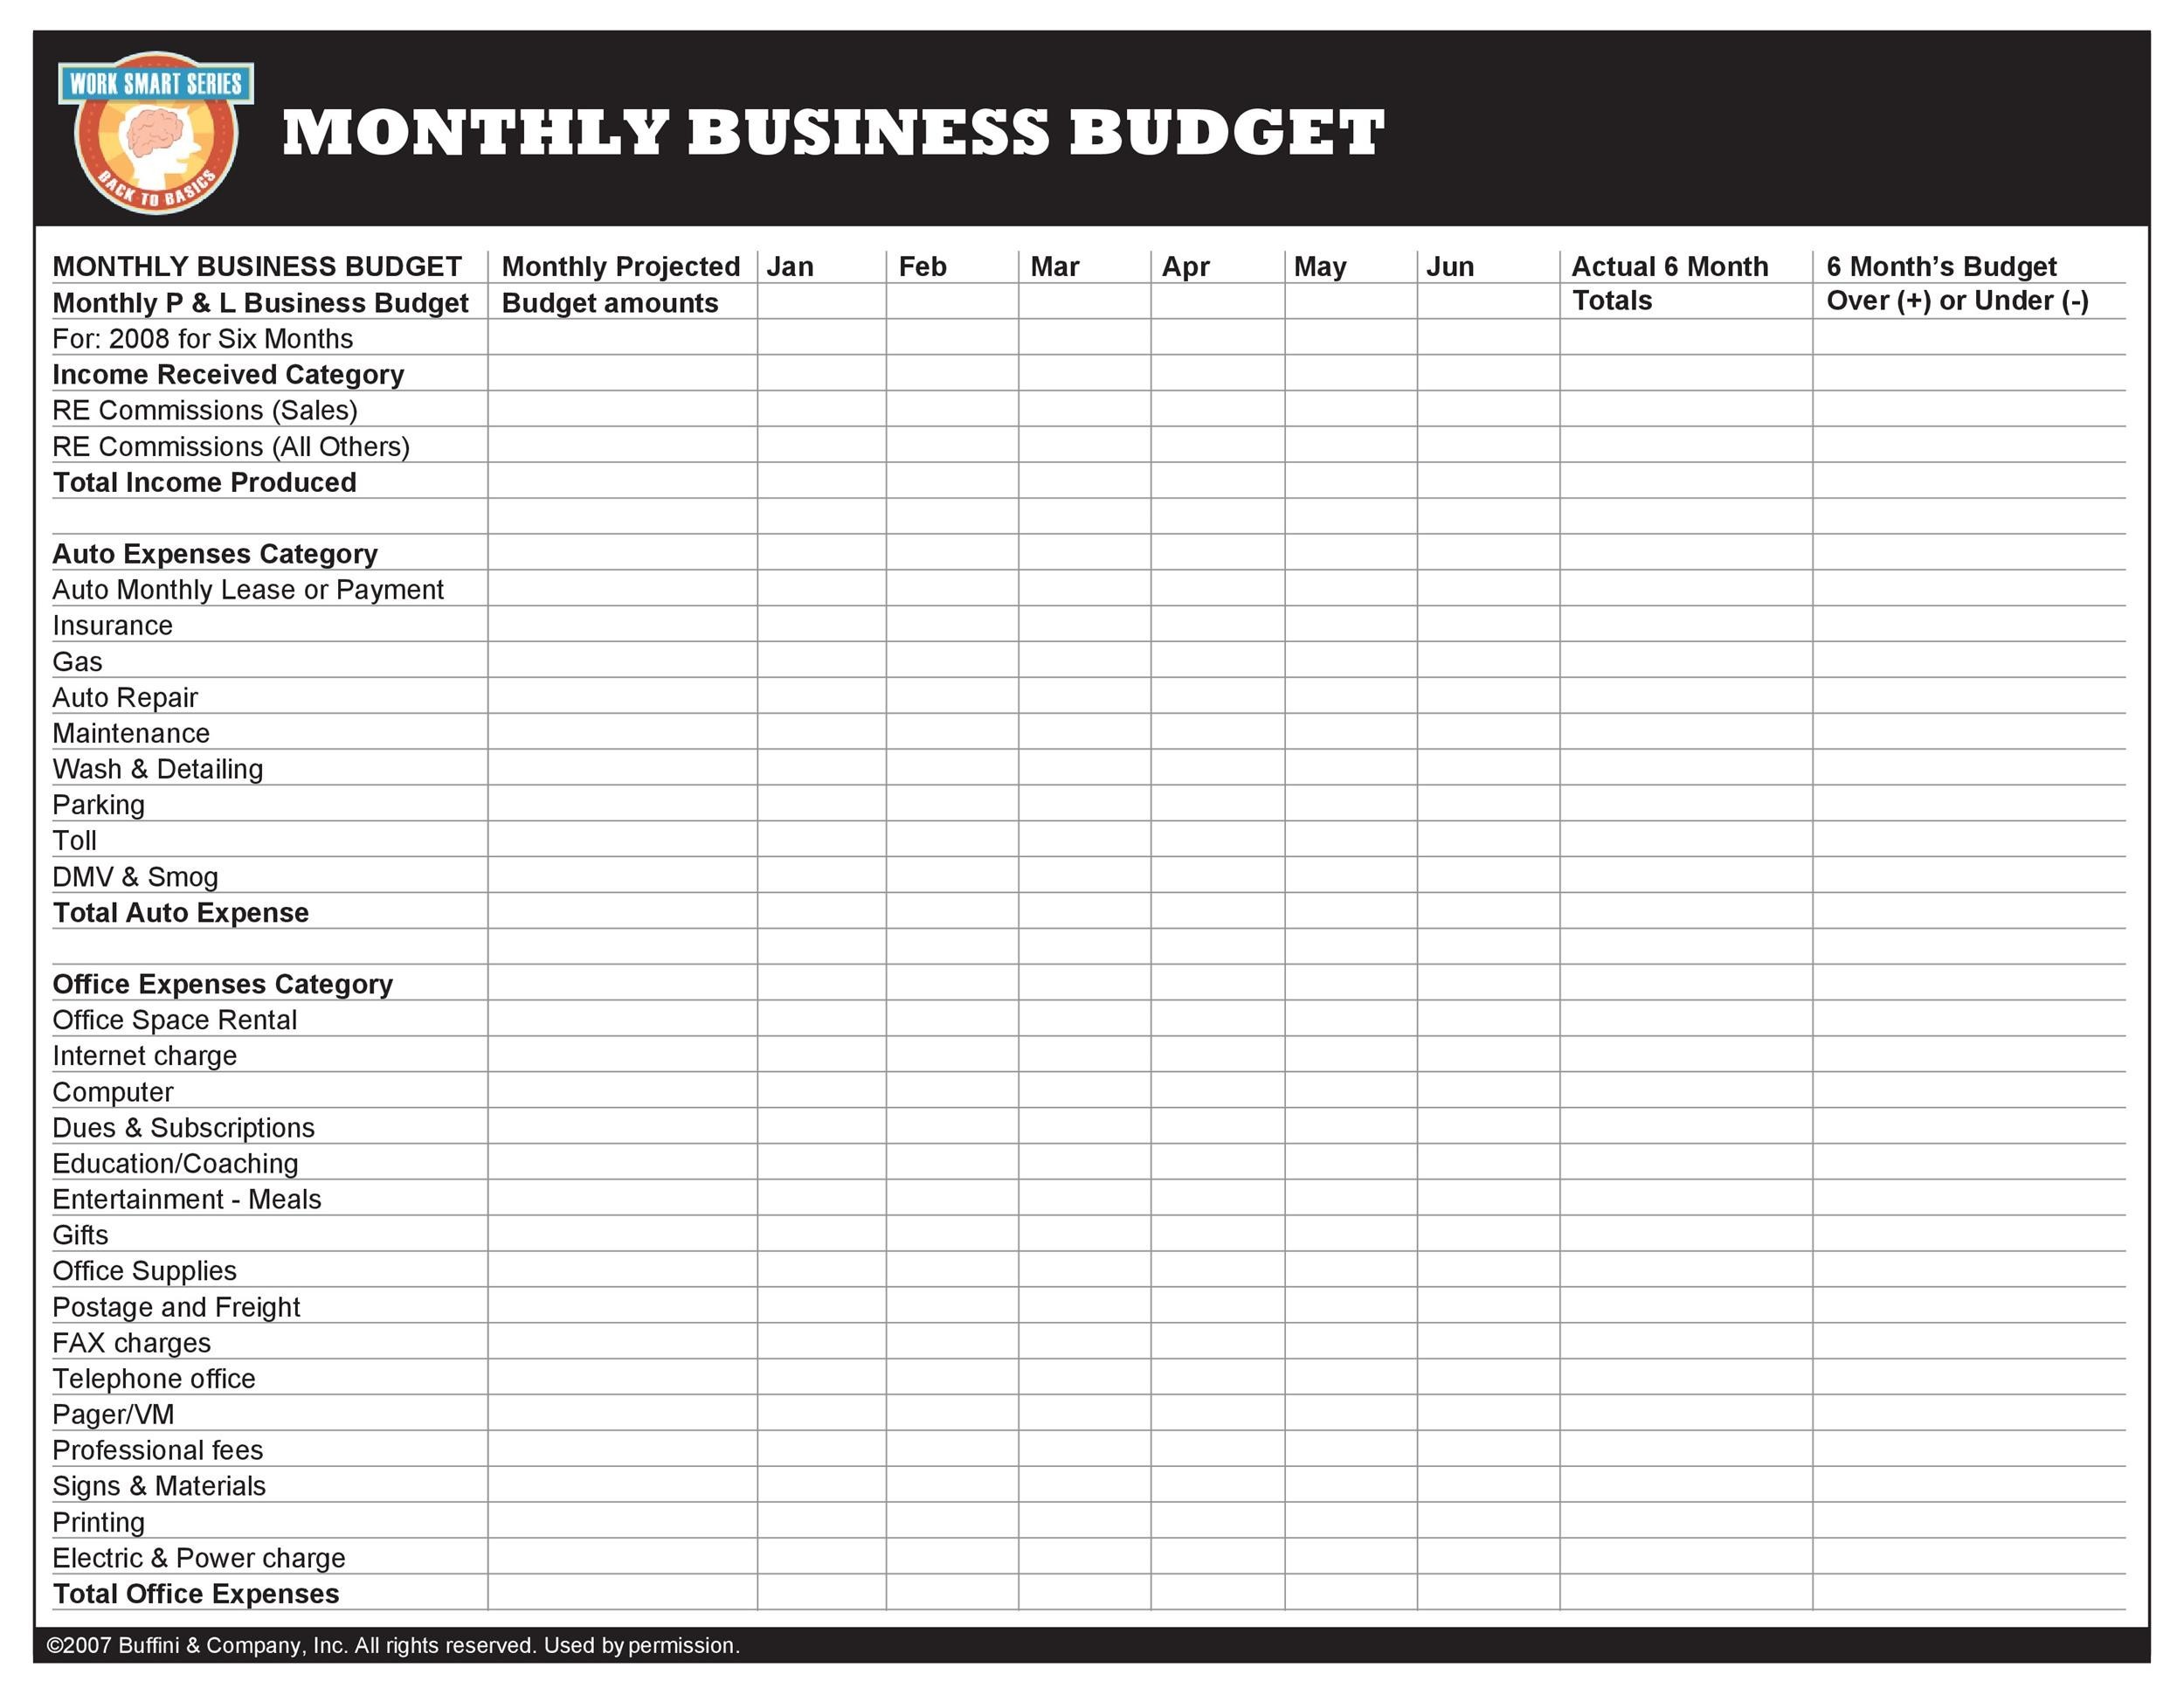 37 Handy Business Budget Templates (Excel, Google Sheets) ᐅ TemplateLab